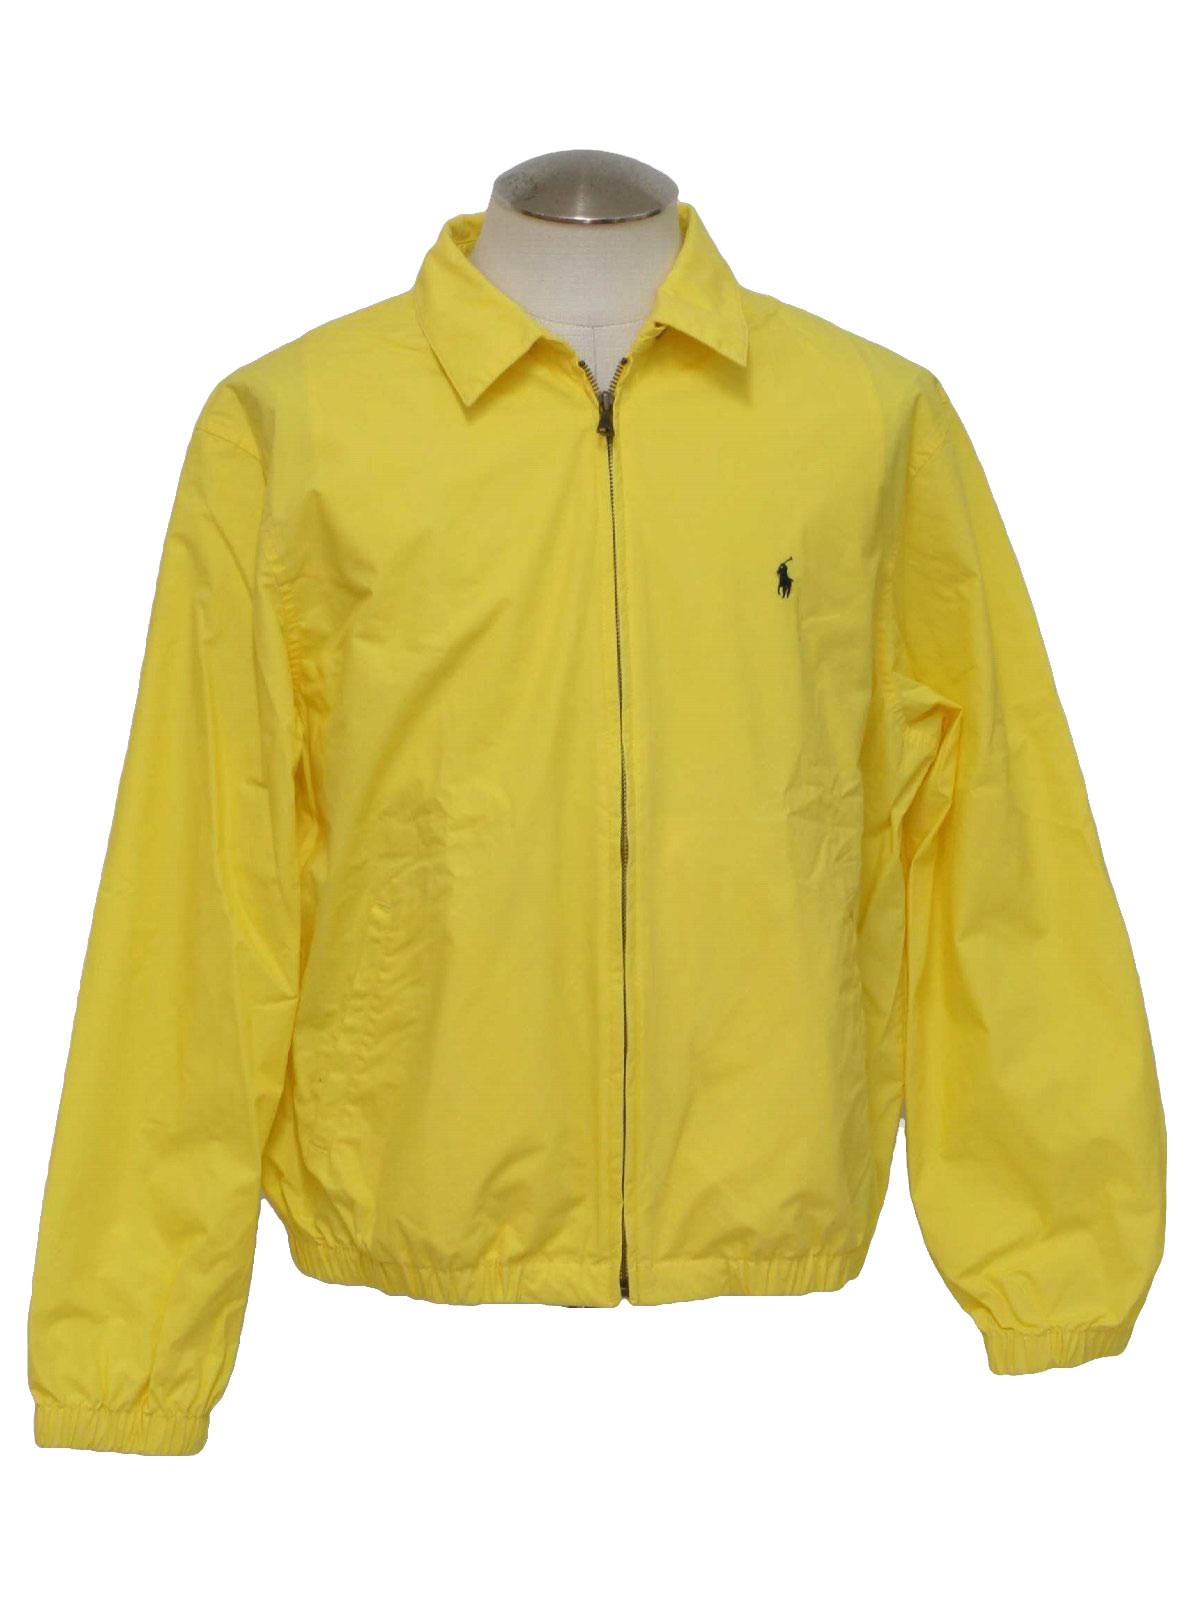 polo yellow jacket